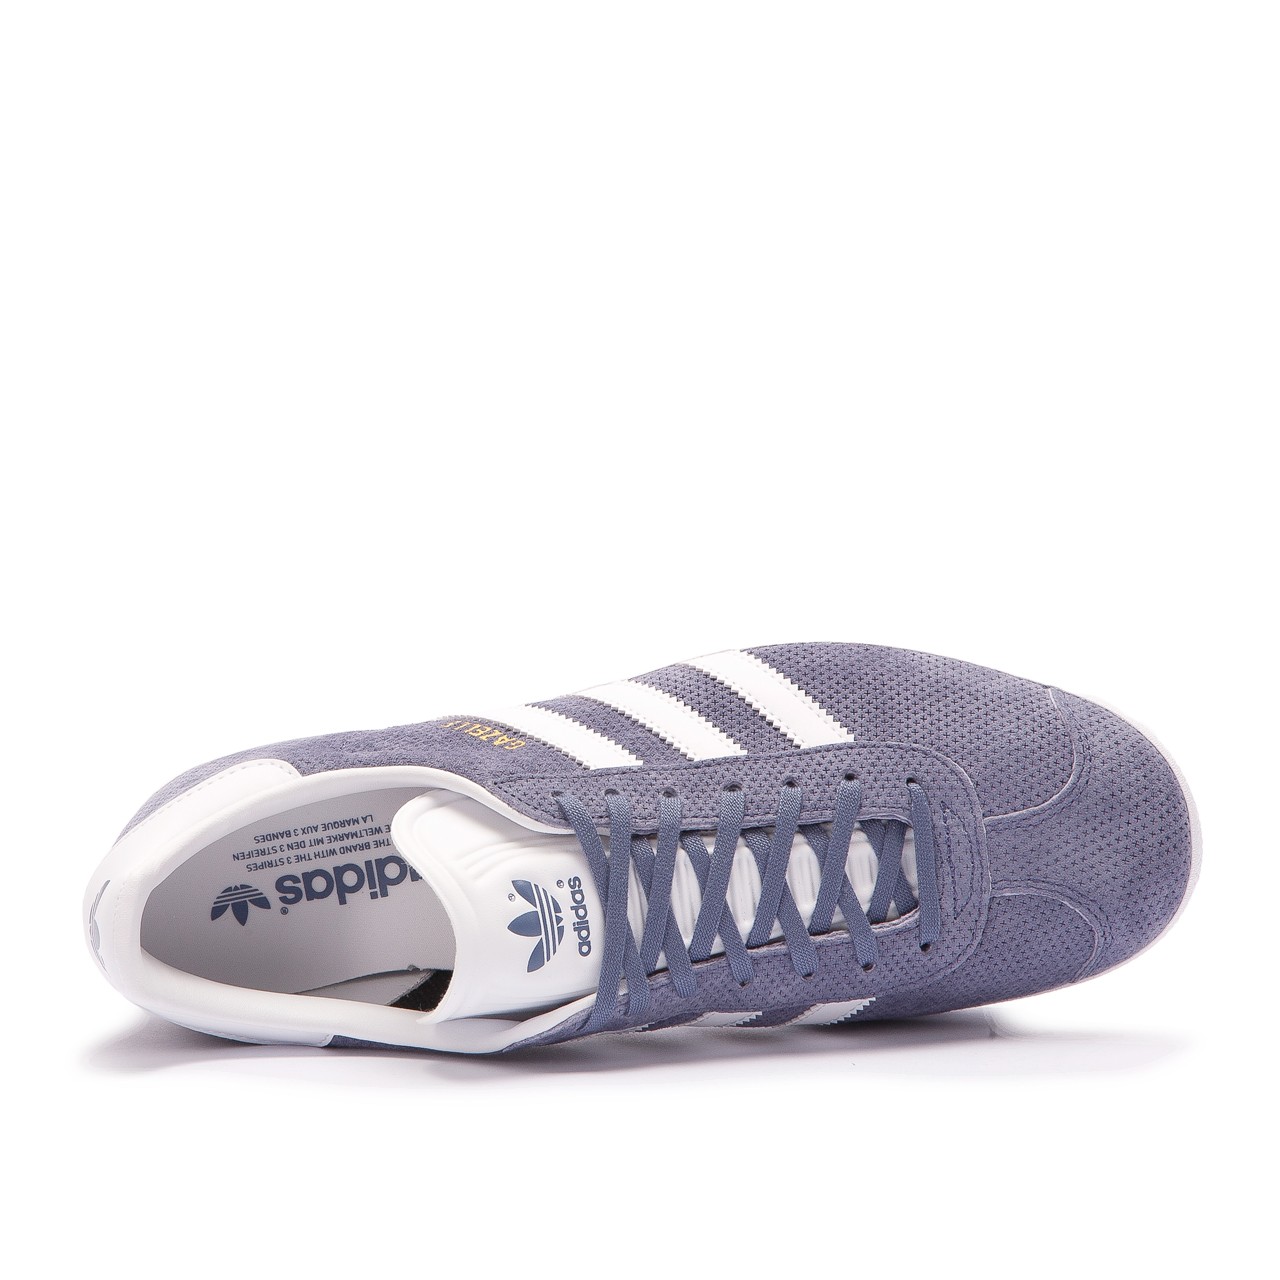 adidas-gazelle-surplus-purple-white-5